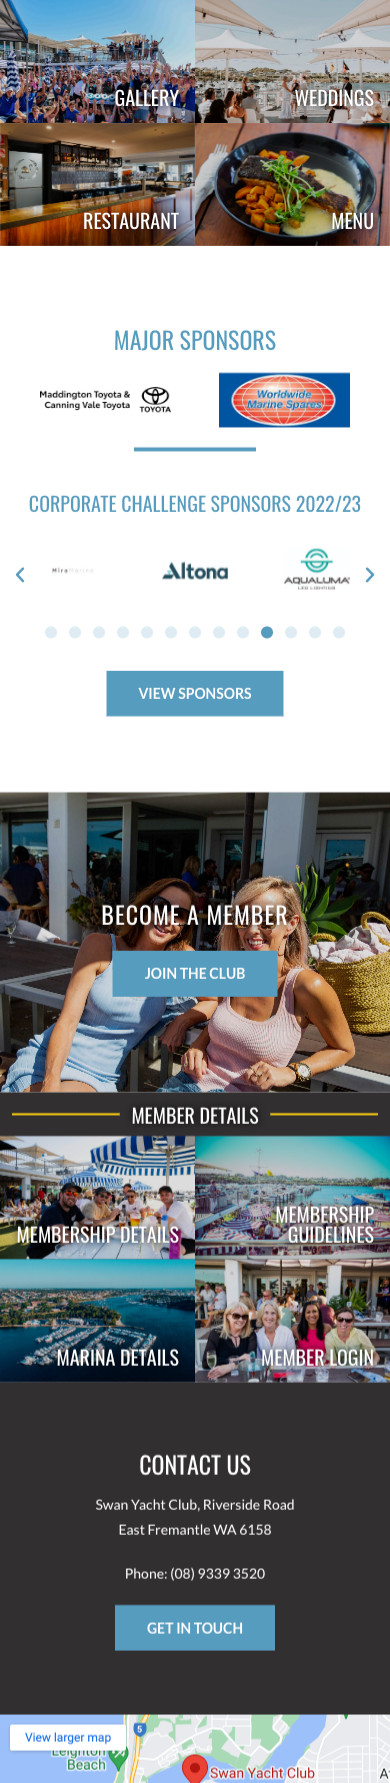 Swan Yacht Club - Mobile Website Development